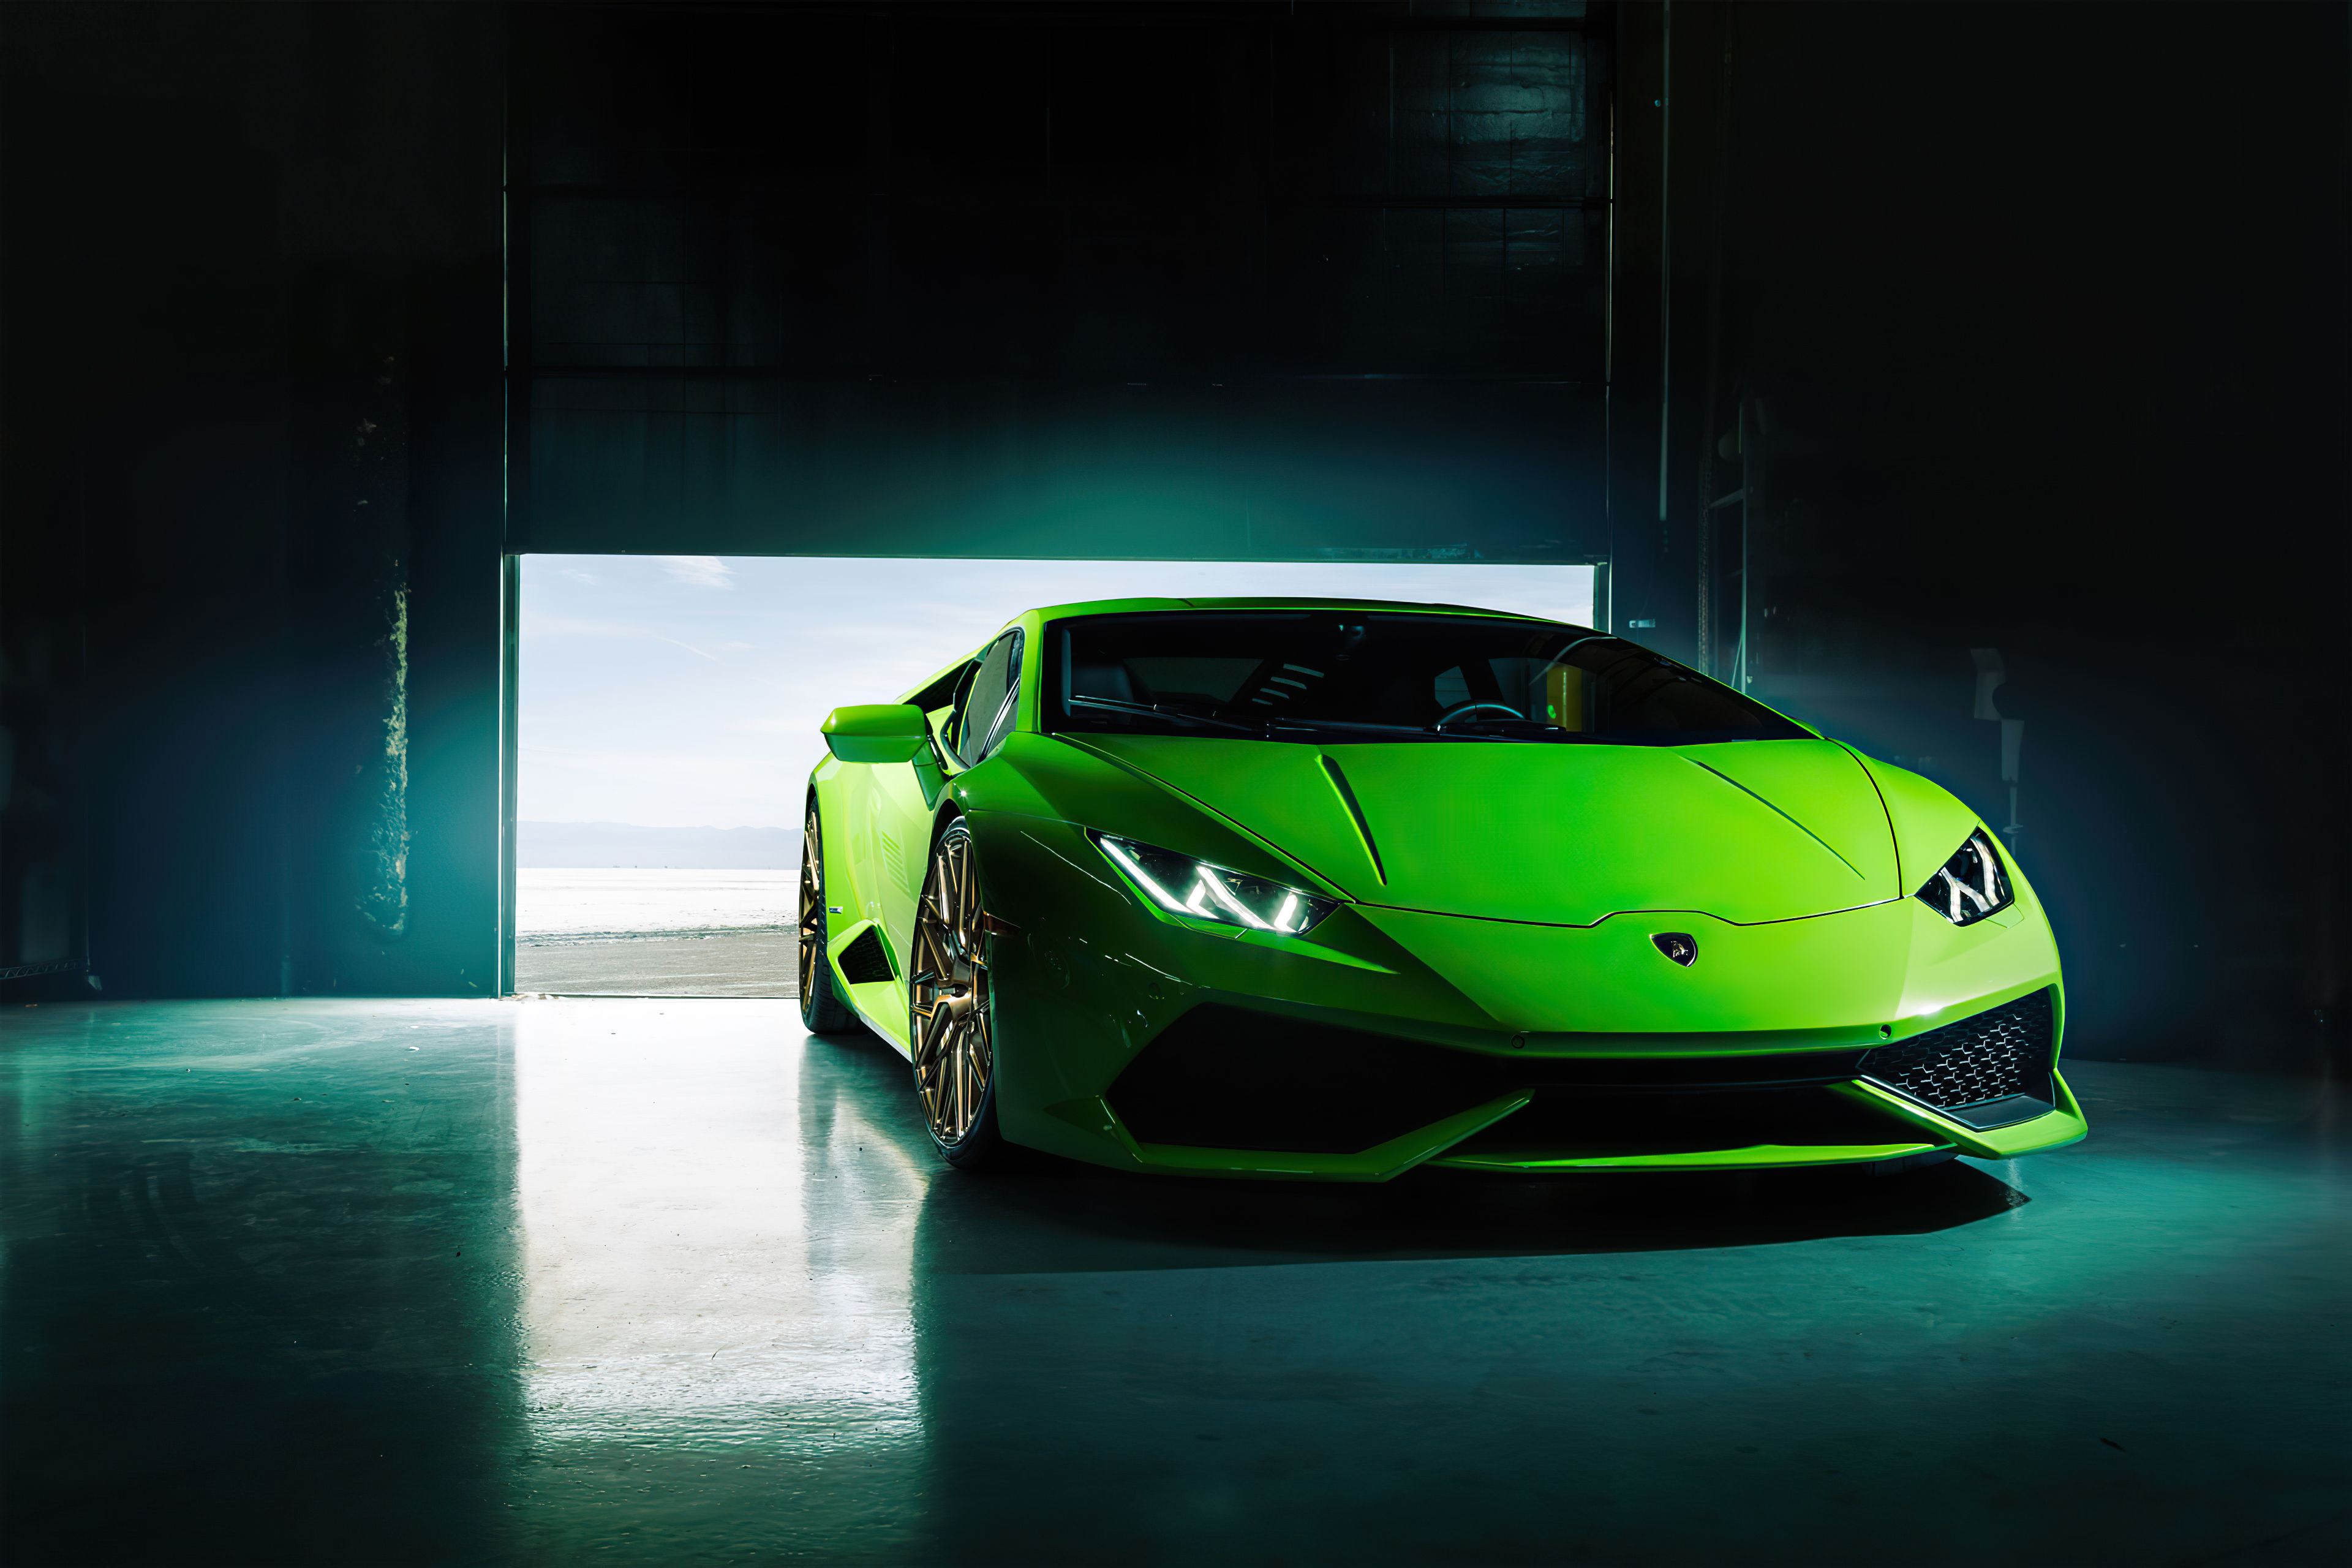 4k Green Lamborghini Huracan HD Cars, 4k Wallpaper, Image, Background, Photo and Picture